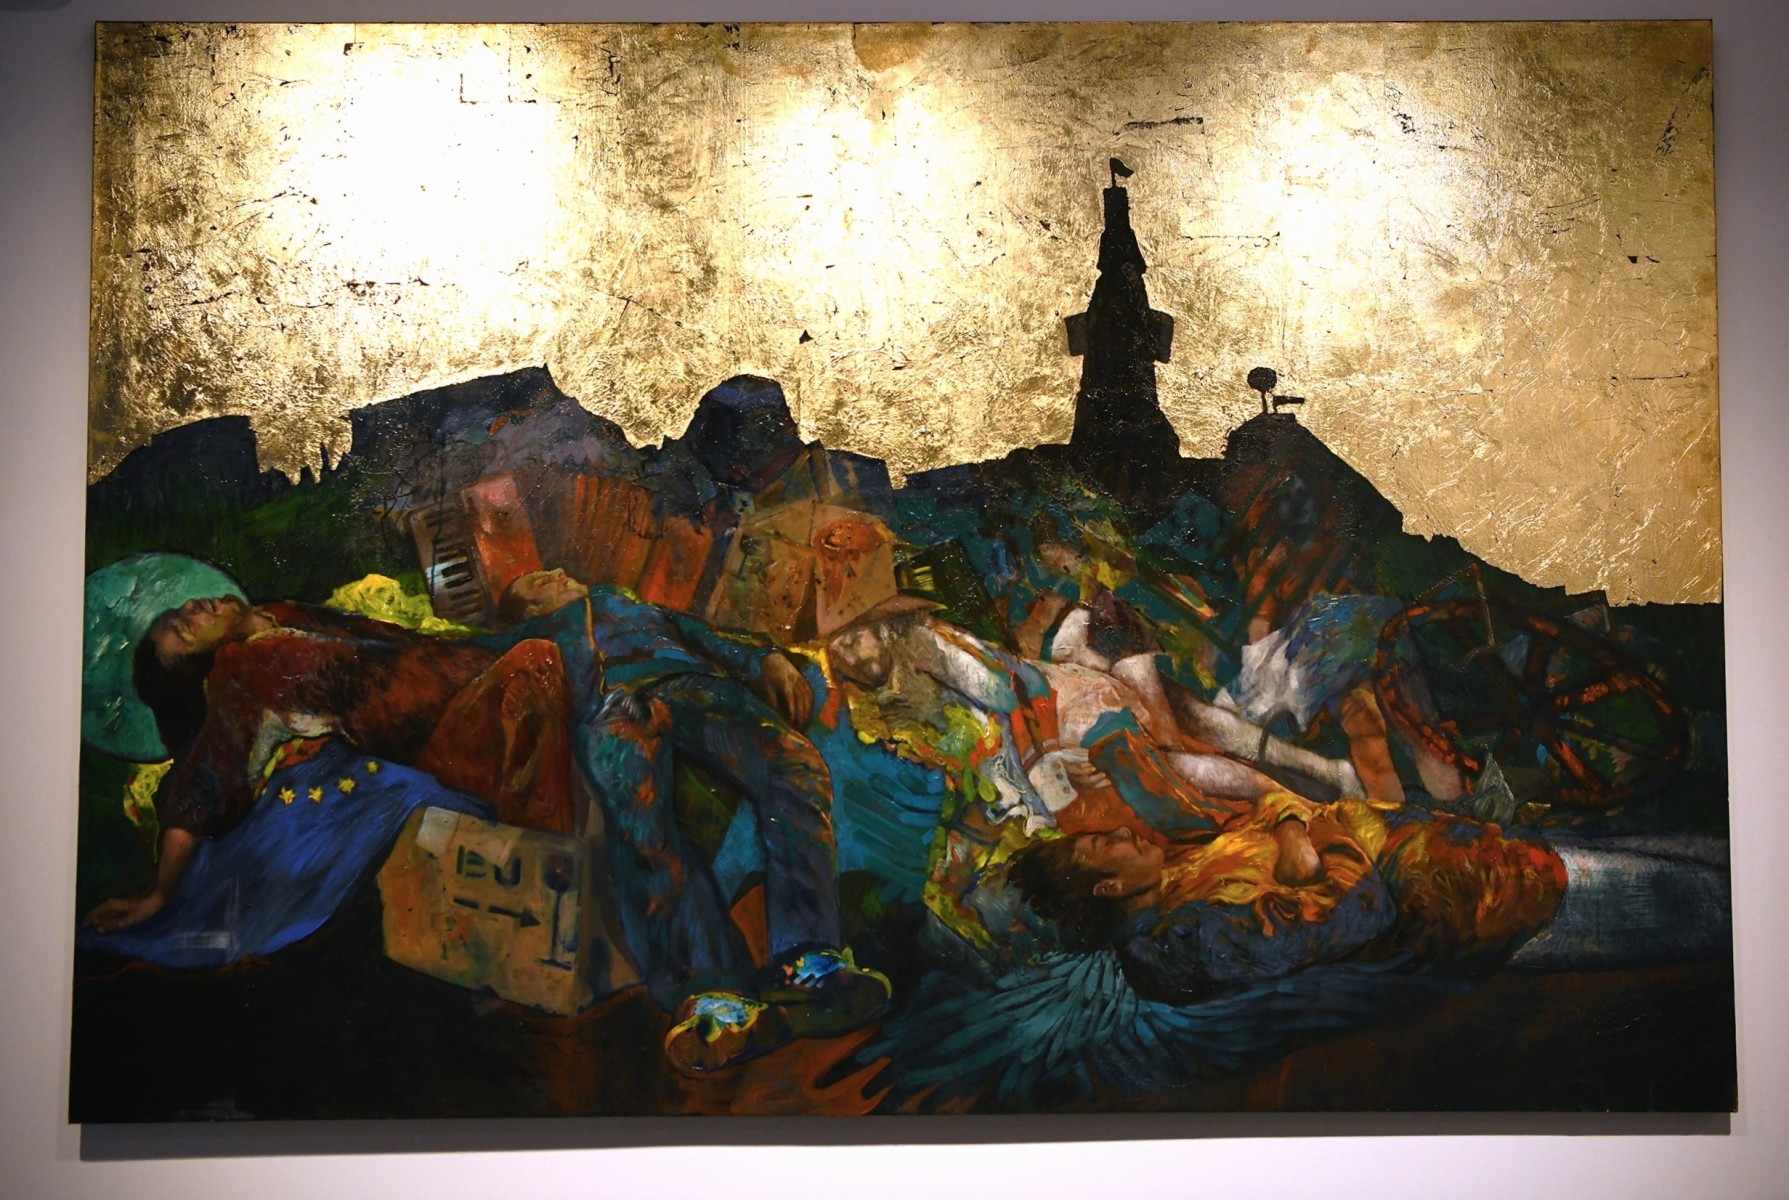 Zoran Tairović, Twilight or Dawn of Europe, 2012-2021. Acrylic, oil on canvas, 160x240 cm.